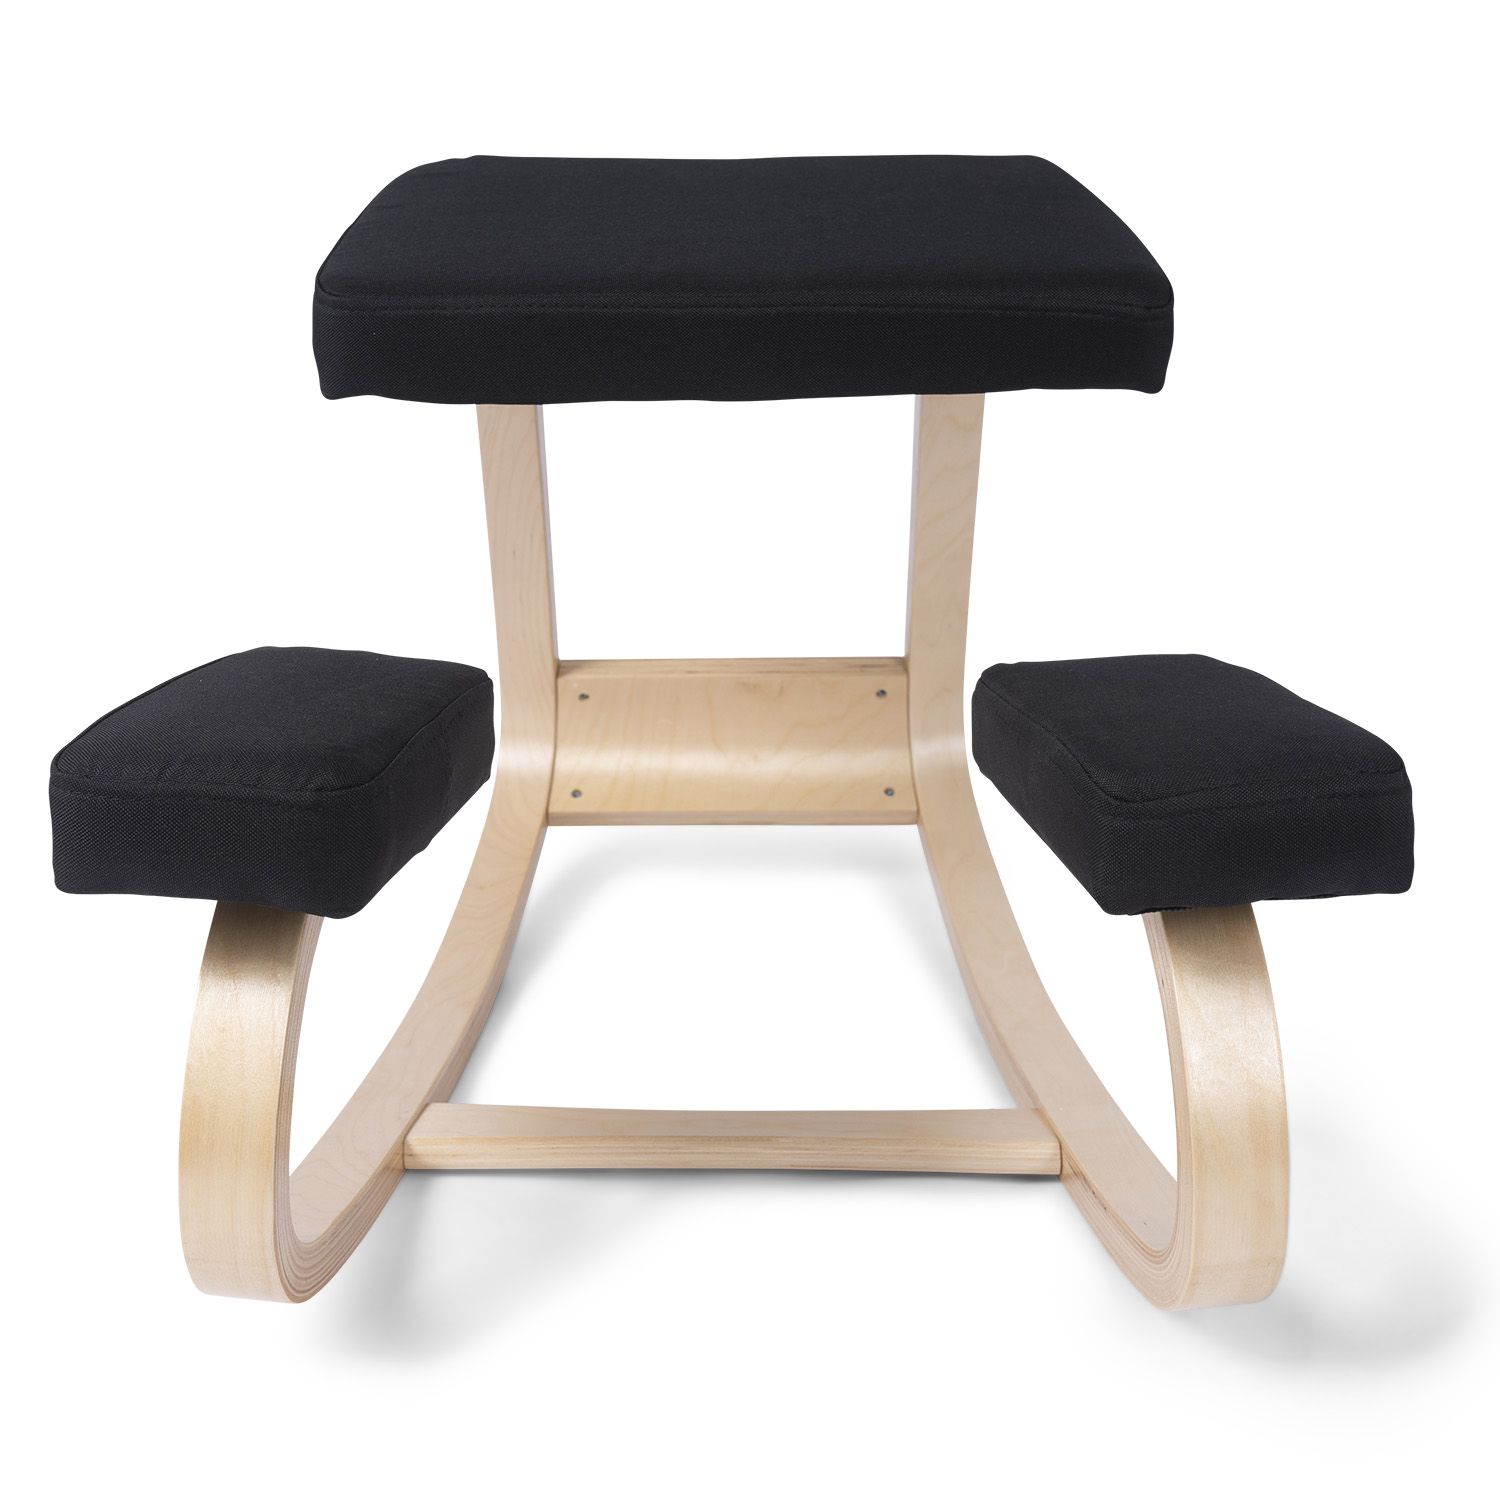 ergonomic kneeling chair product information